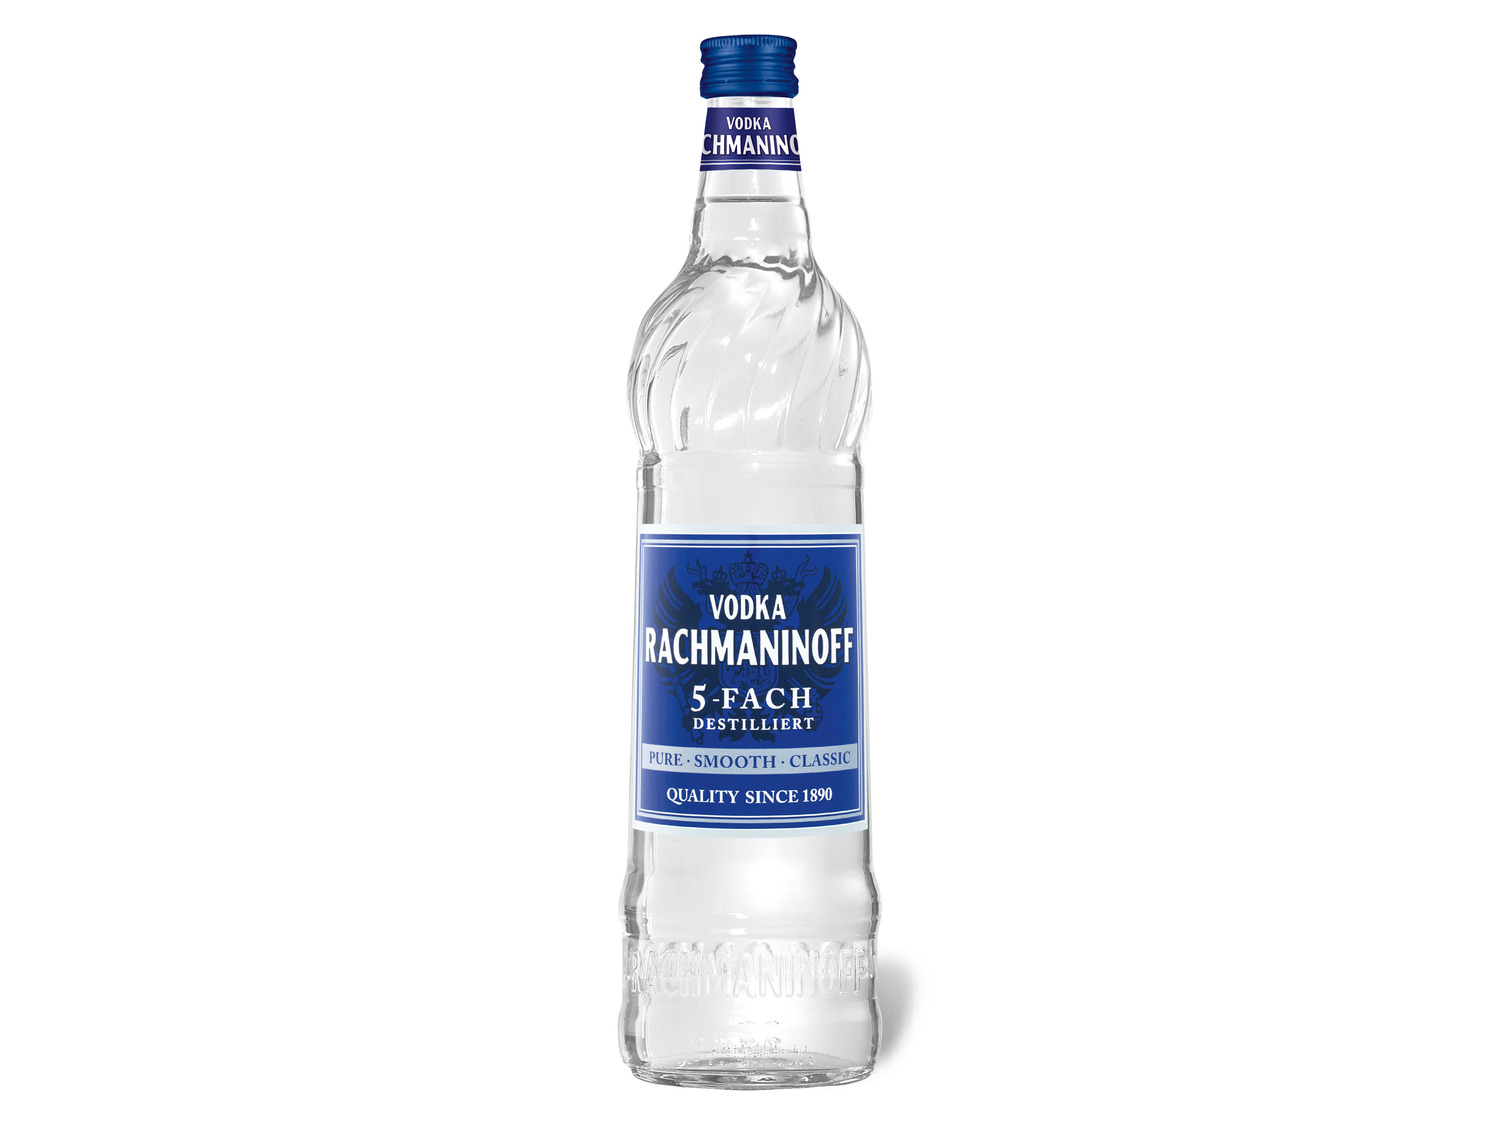 5-fach 40% RACHMANINOFF destilliert Vol | Wodka LIDL